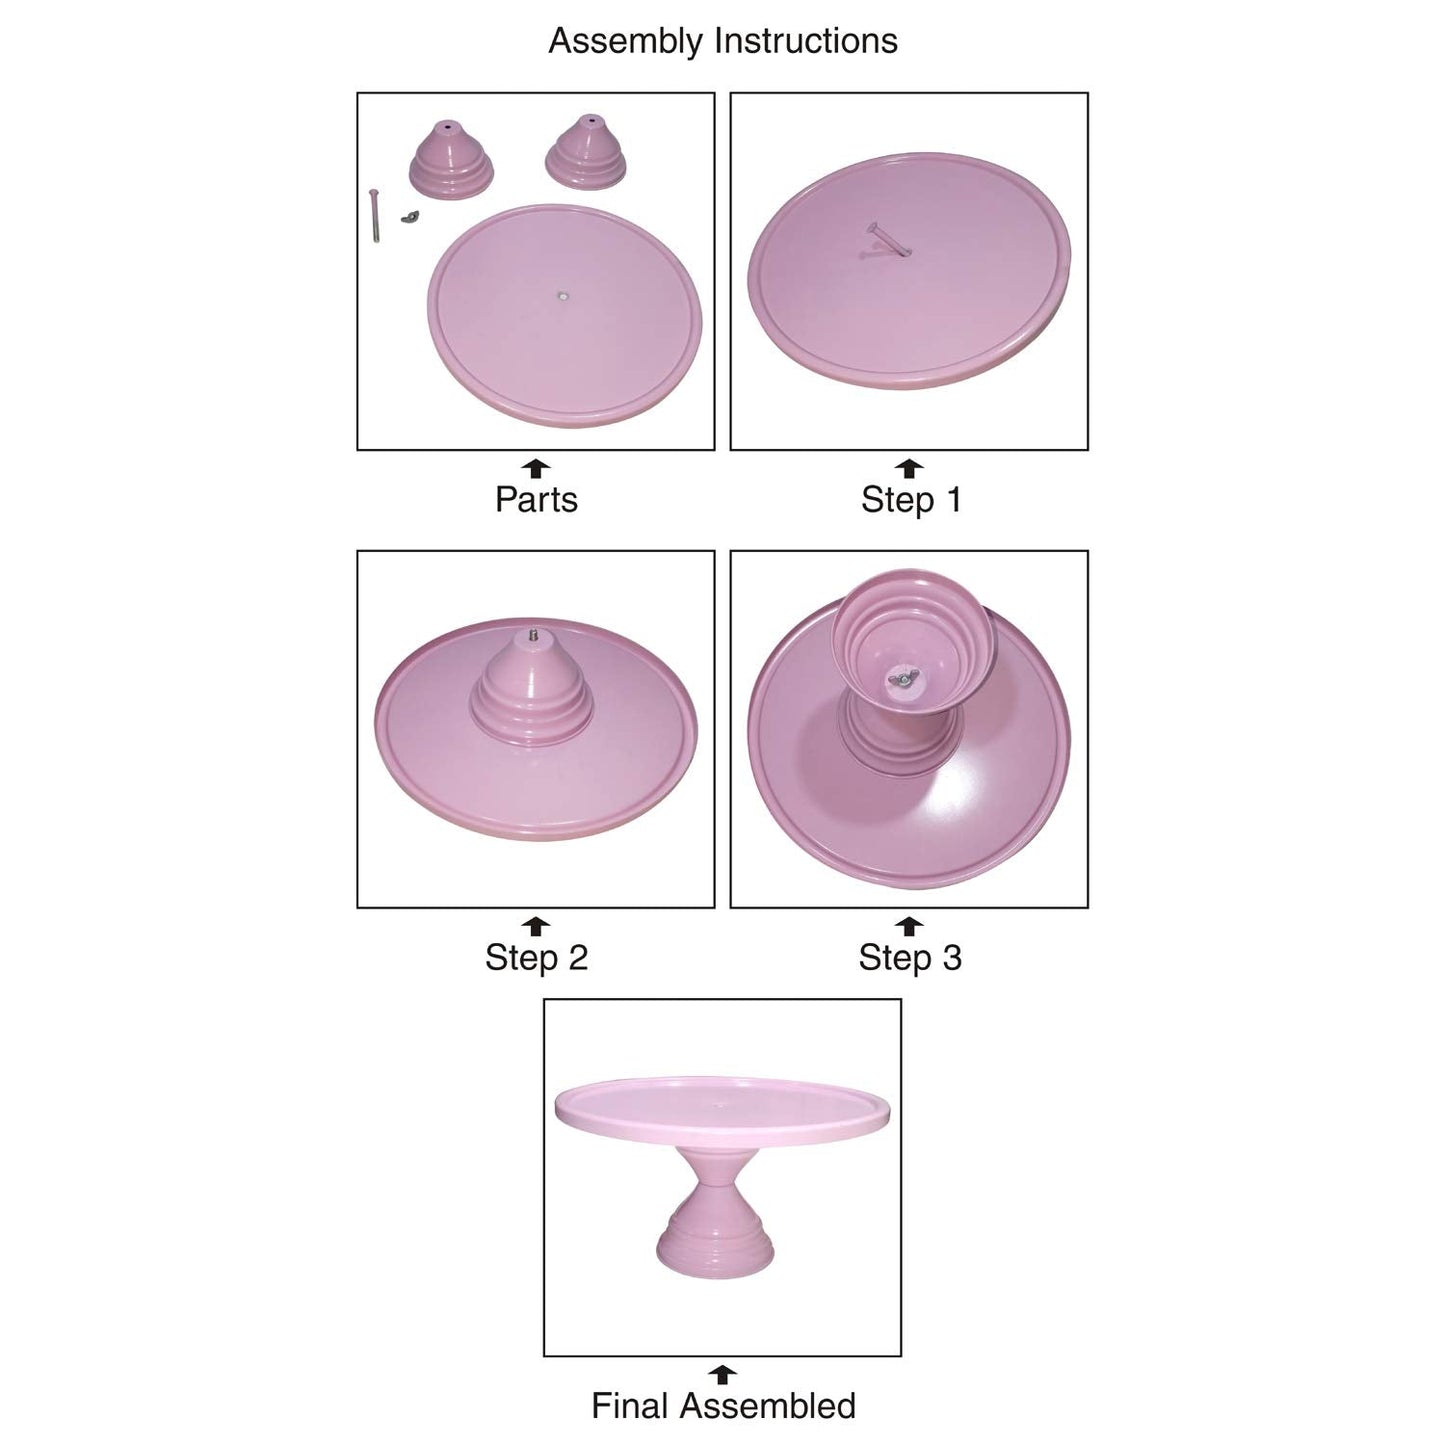 GiftBay Creations Cake Stand Pedestal 13" Diameter (Top), Strong Metal (Pink)